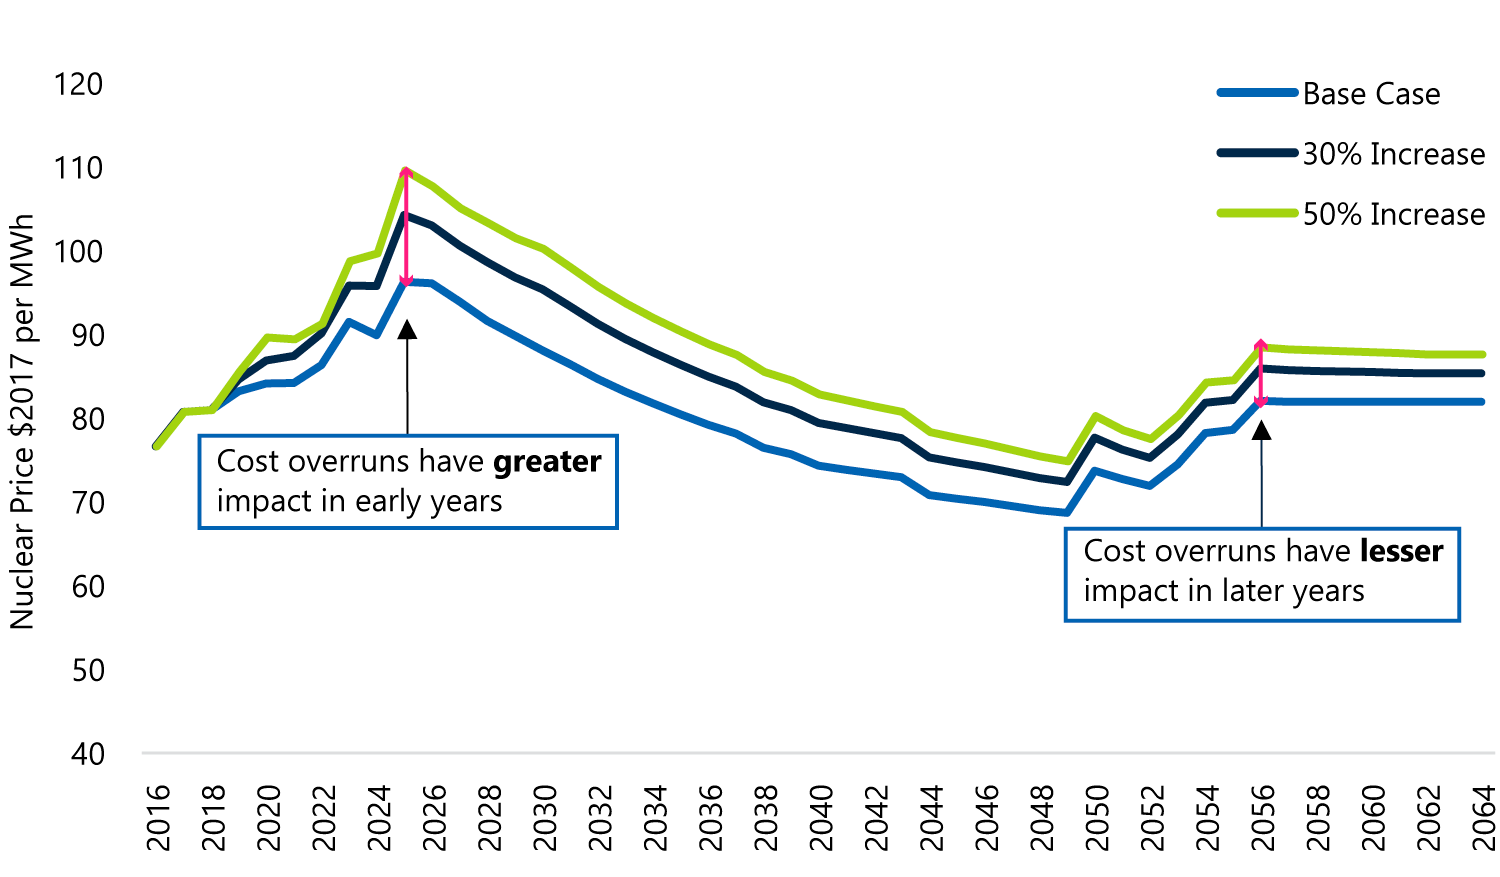 Figure 5‑1: Illustration of Nuclear Price Trend Under Different Refurbishment Cost Overrun Scenarios